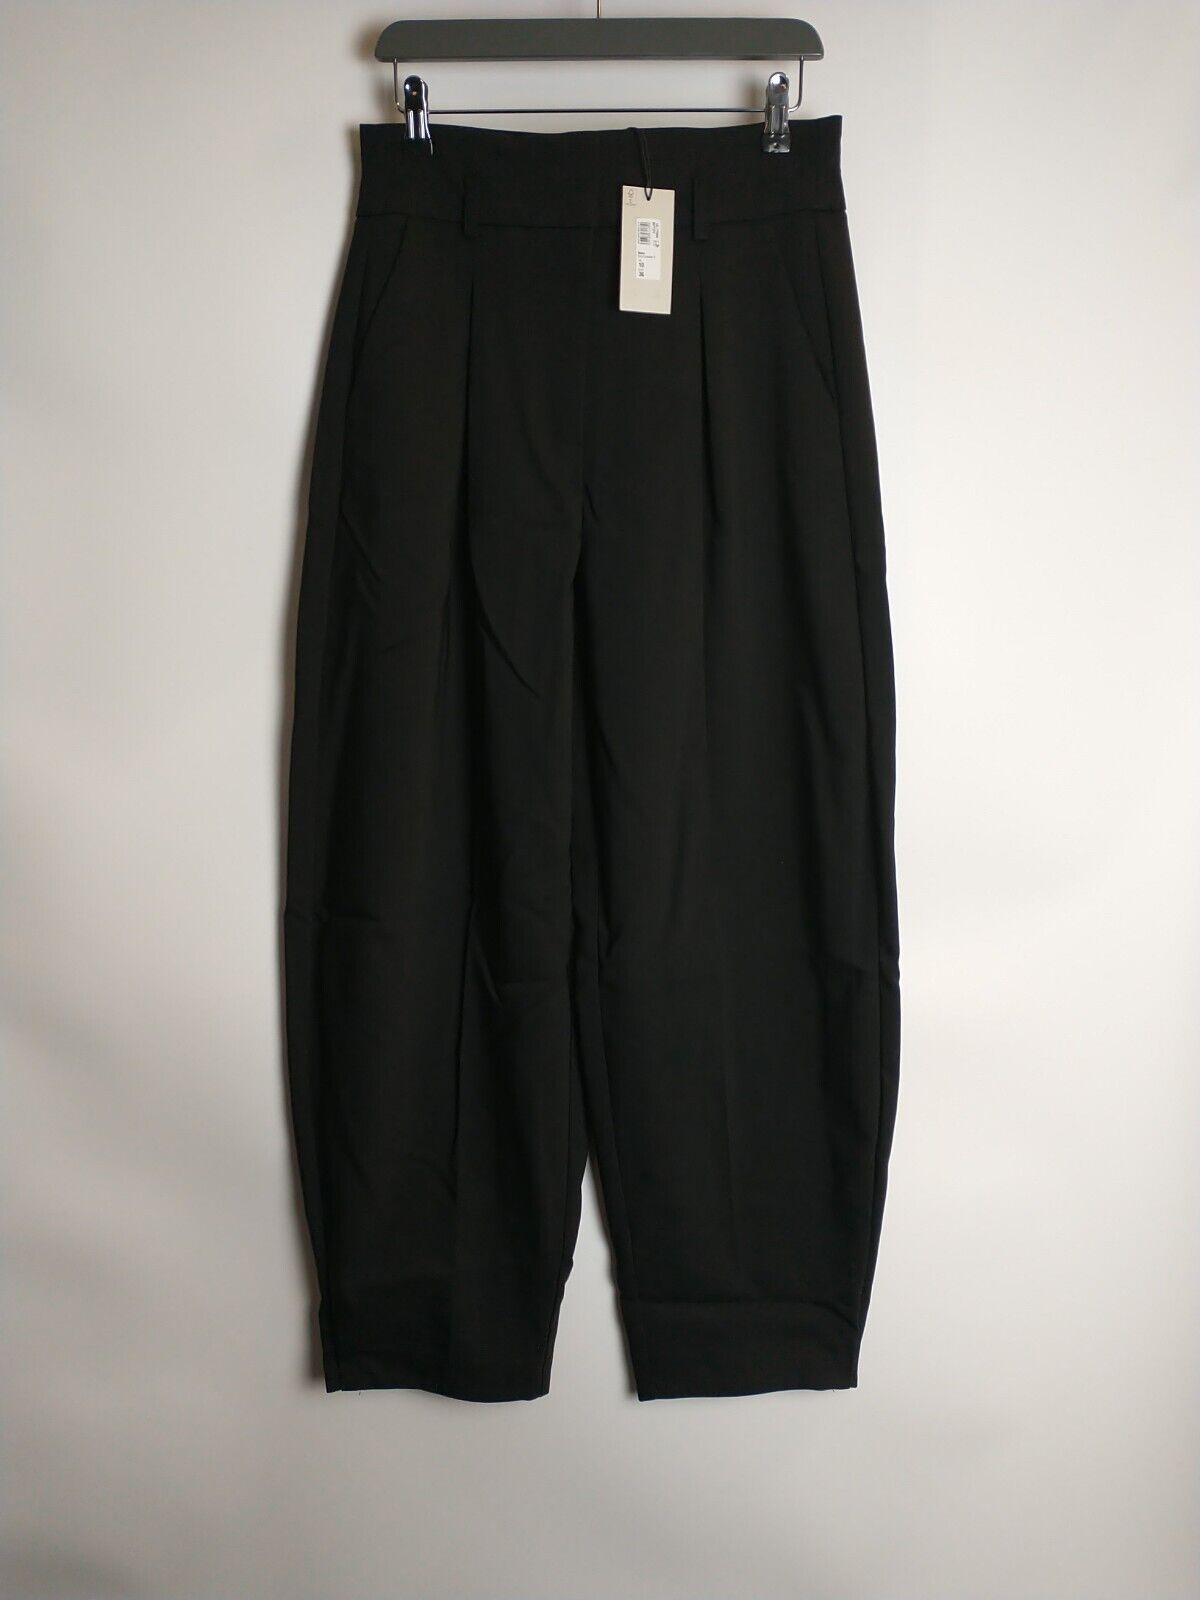 River Island Eco Couture S - Black. UK 6 **** Ref V225